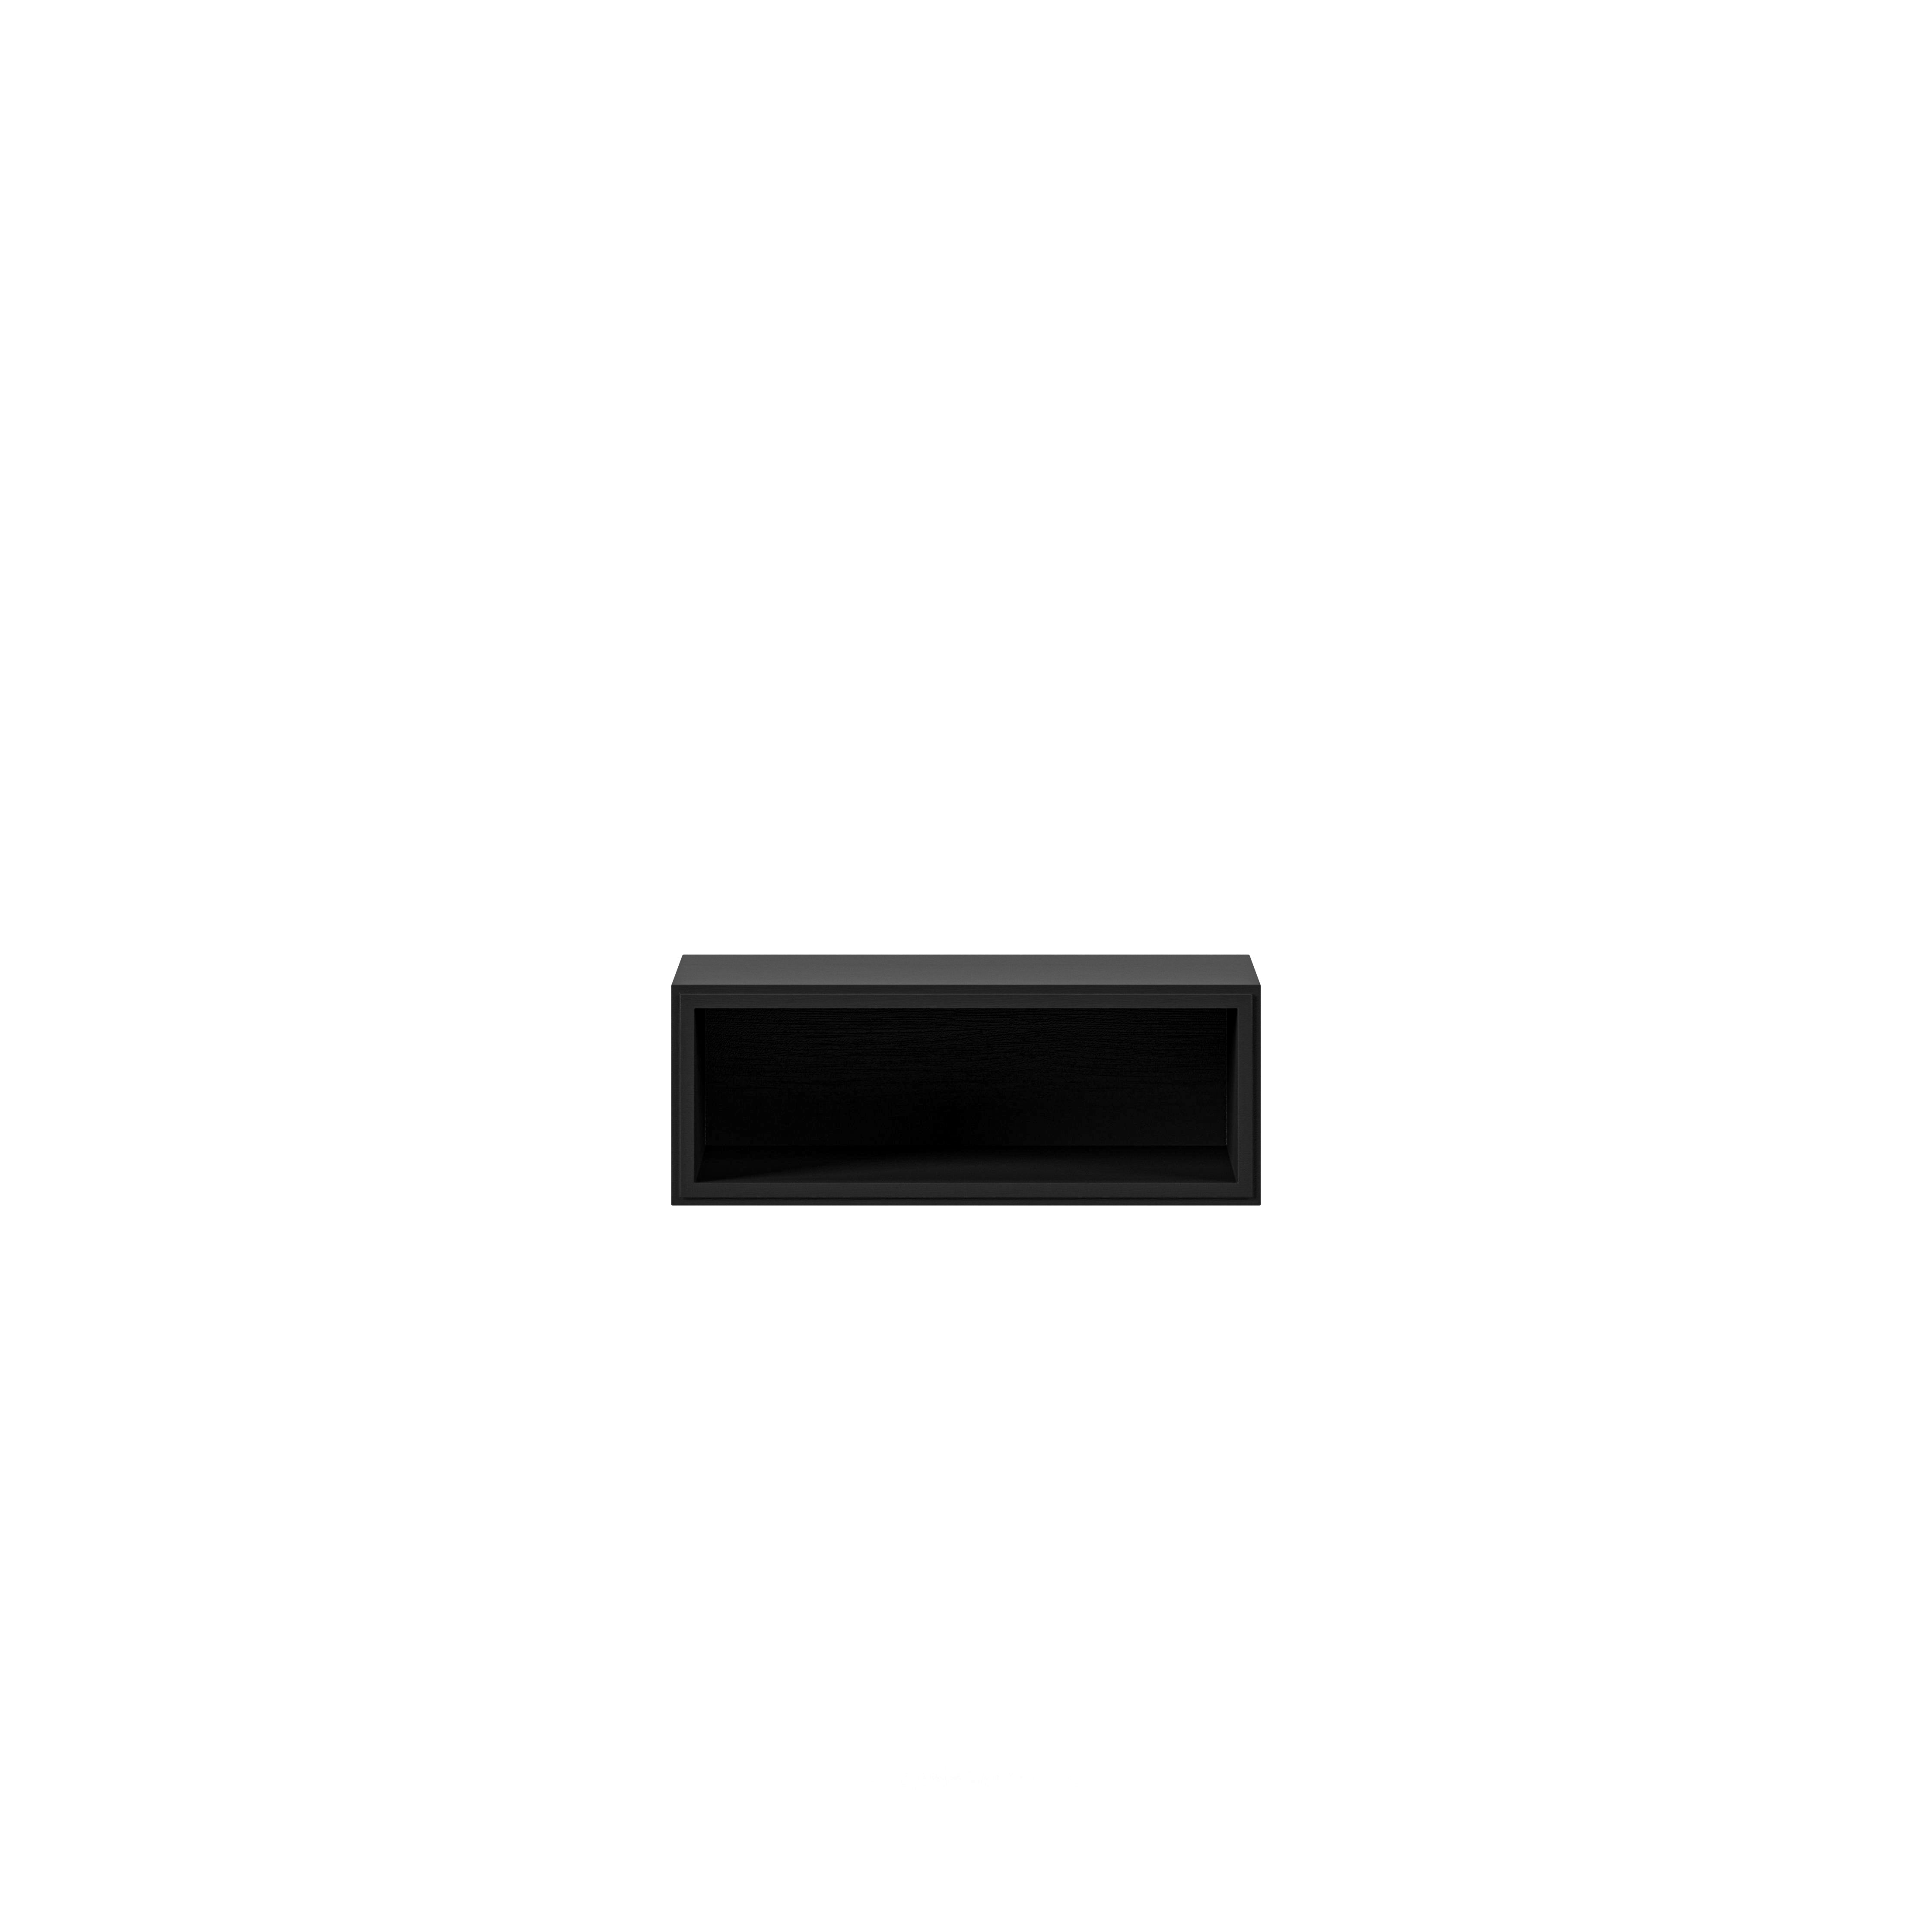 Englesson Bord Black Brushed Edge 2.0 Sängbord Vägghängd 726ESB #Färg_Black #Colour_Black